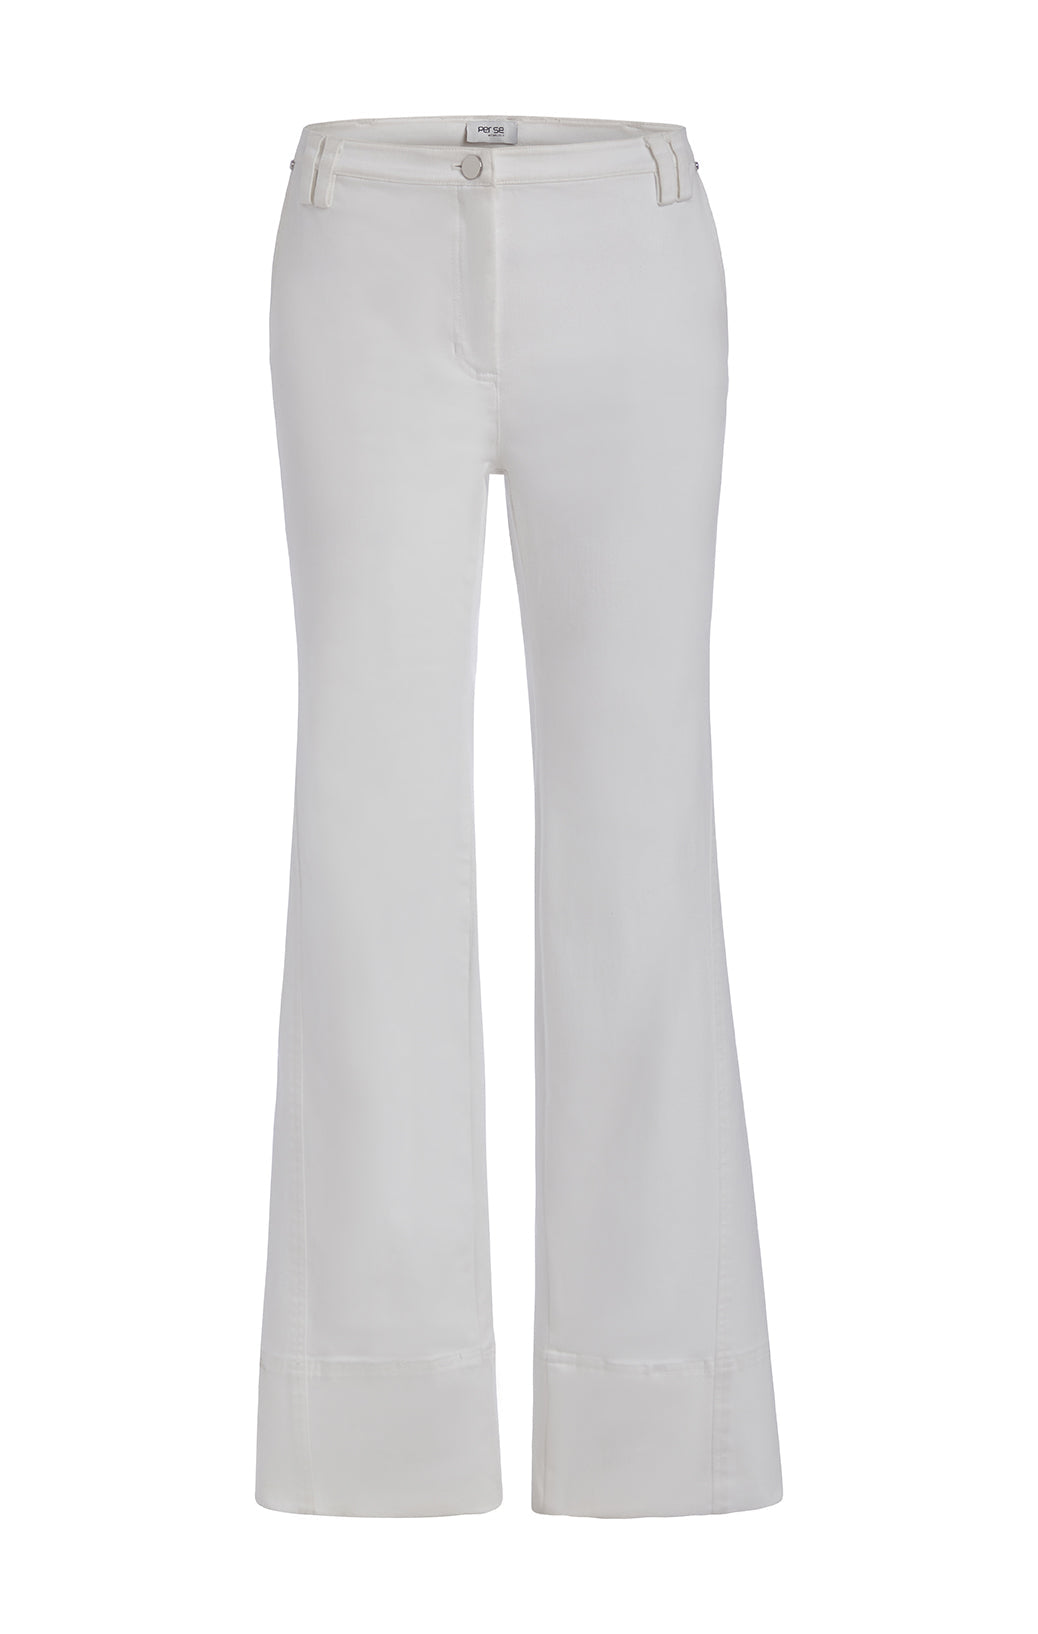 Finesse-Blk - Flap-Pocket, Double-Weave Pants - Product Image